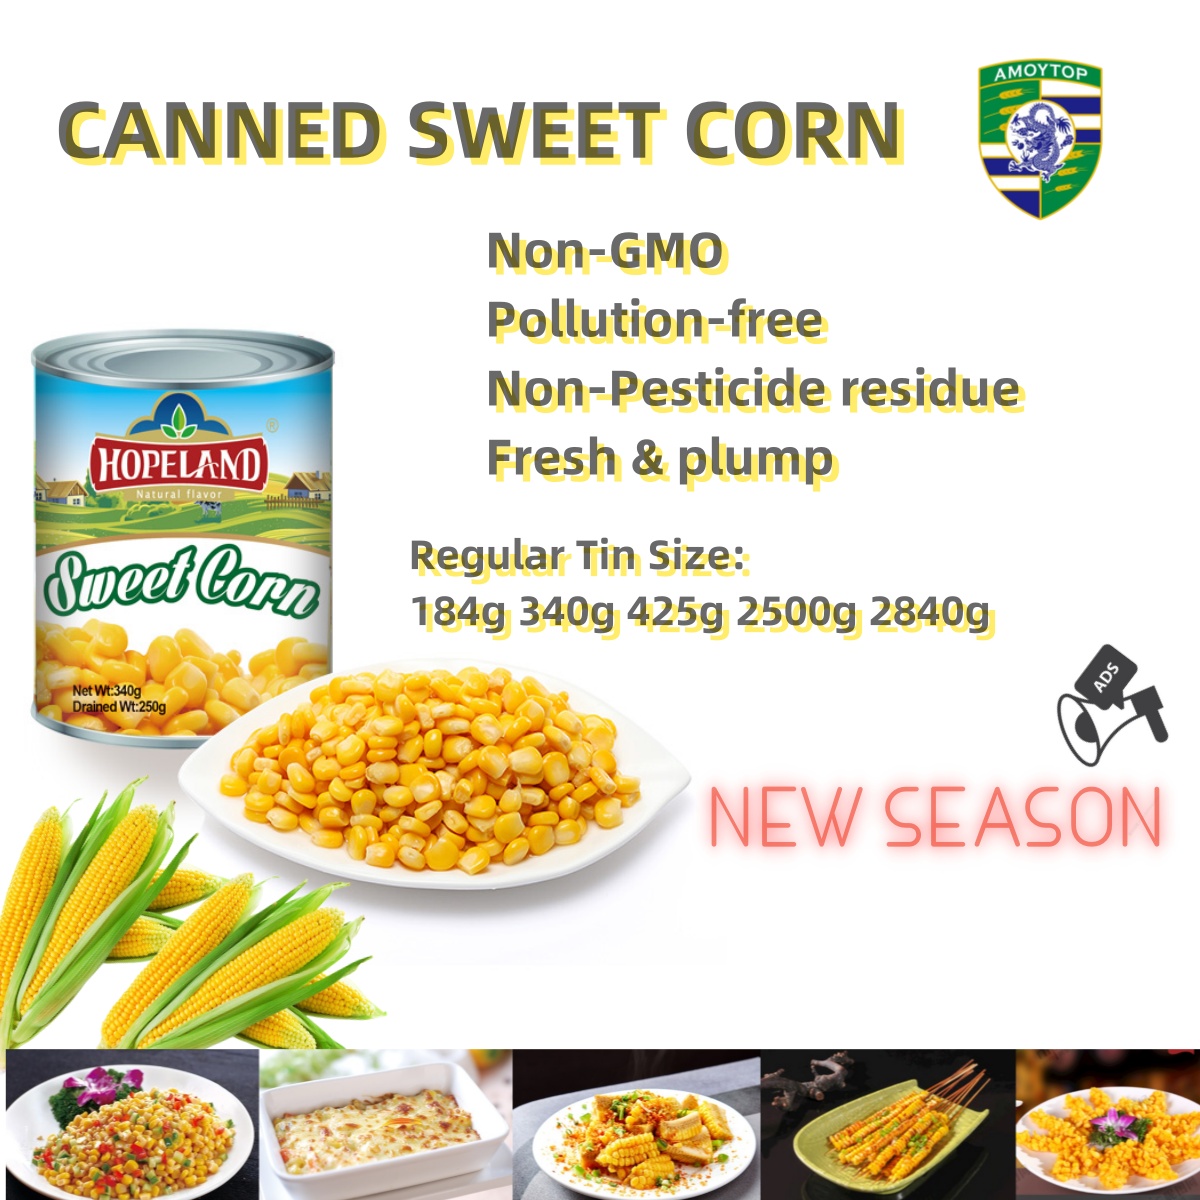 The season of Sweet corn is coming